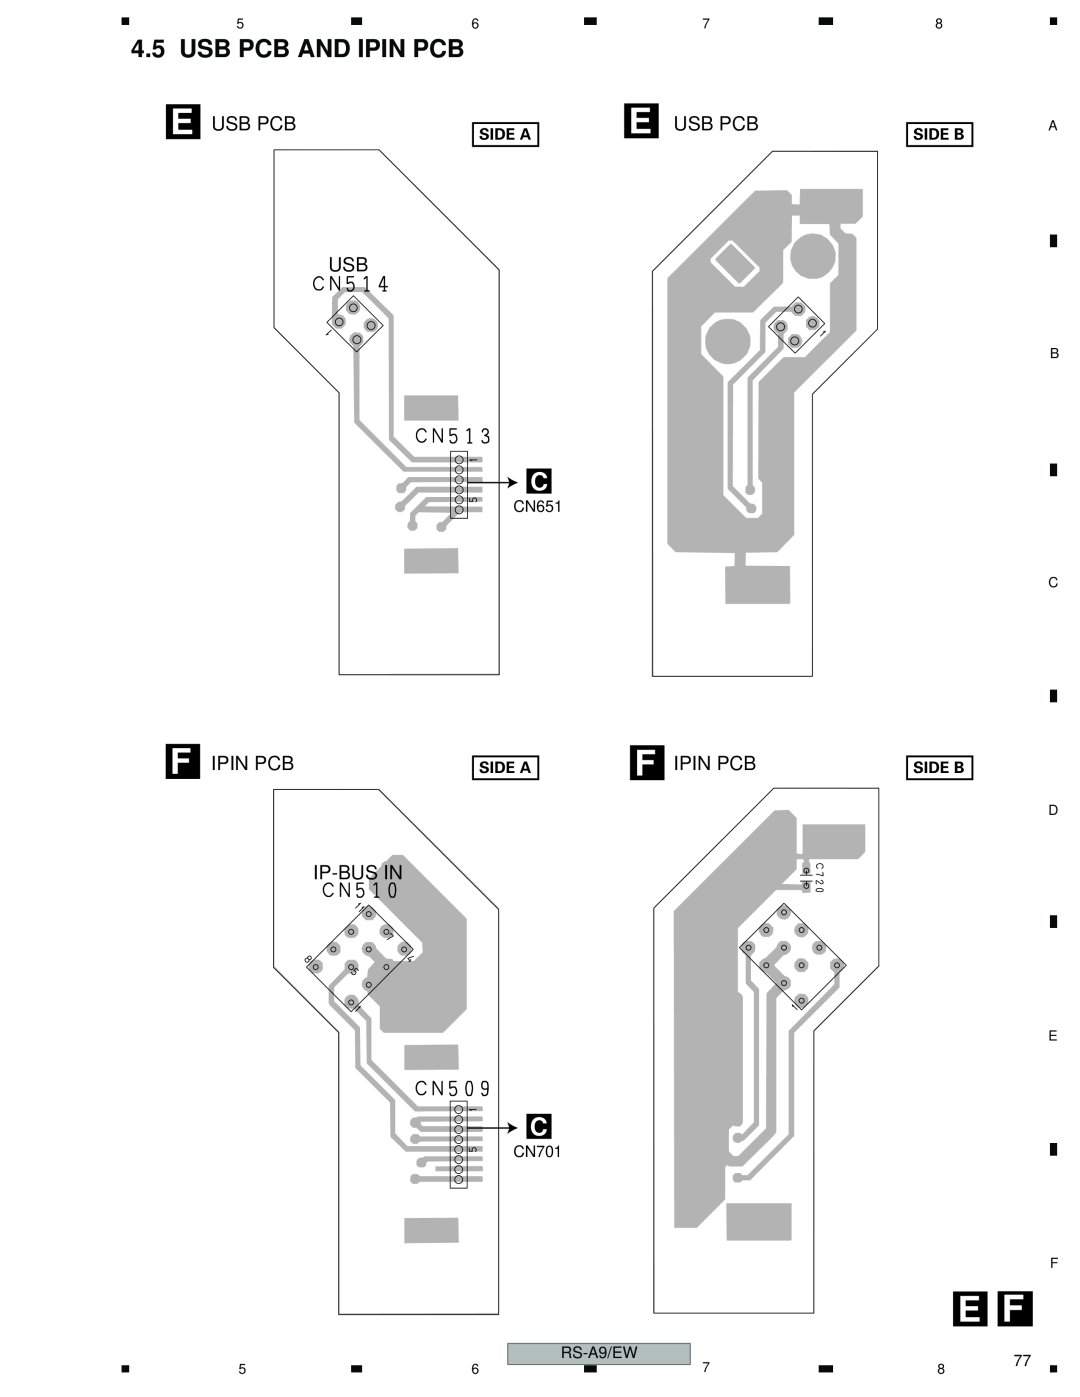 Pioneer RS-A9/EW manual Usb Pcb And Ipin Pcb, E Usb Pcb Usb, F Ipin Pcb Ip-Busin, Side A, Side B 